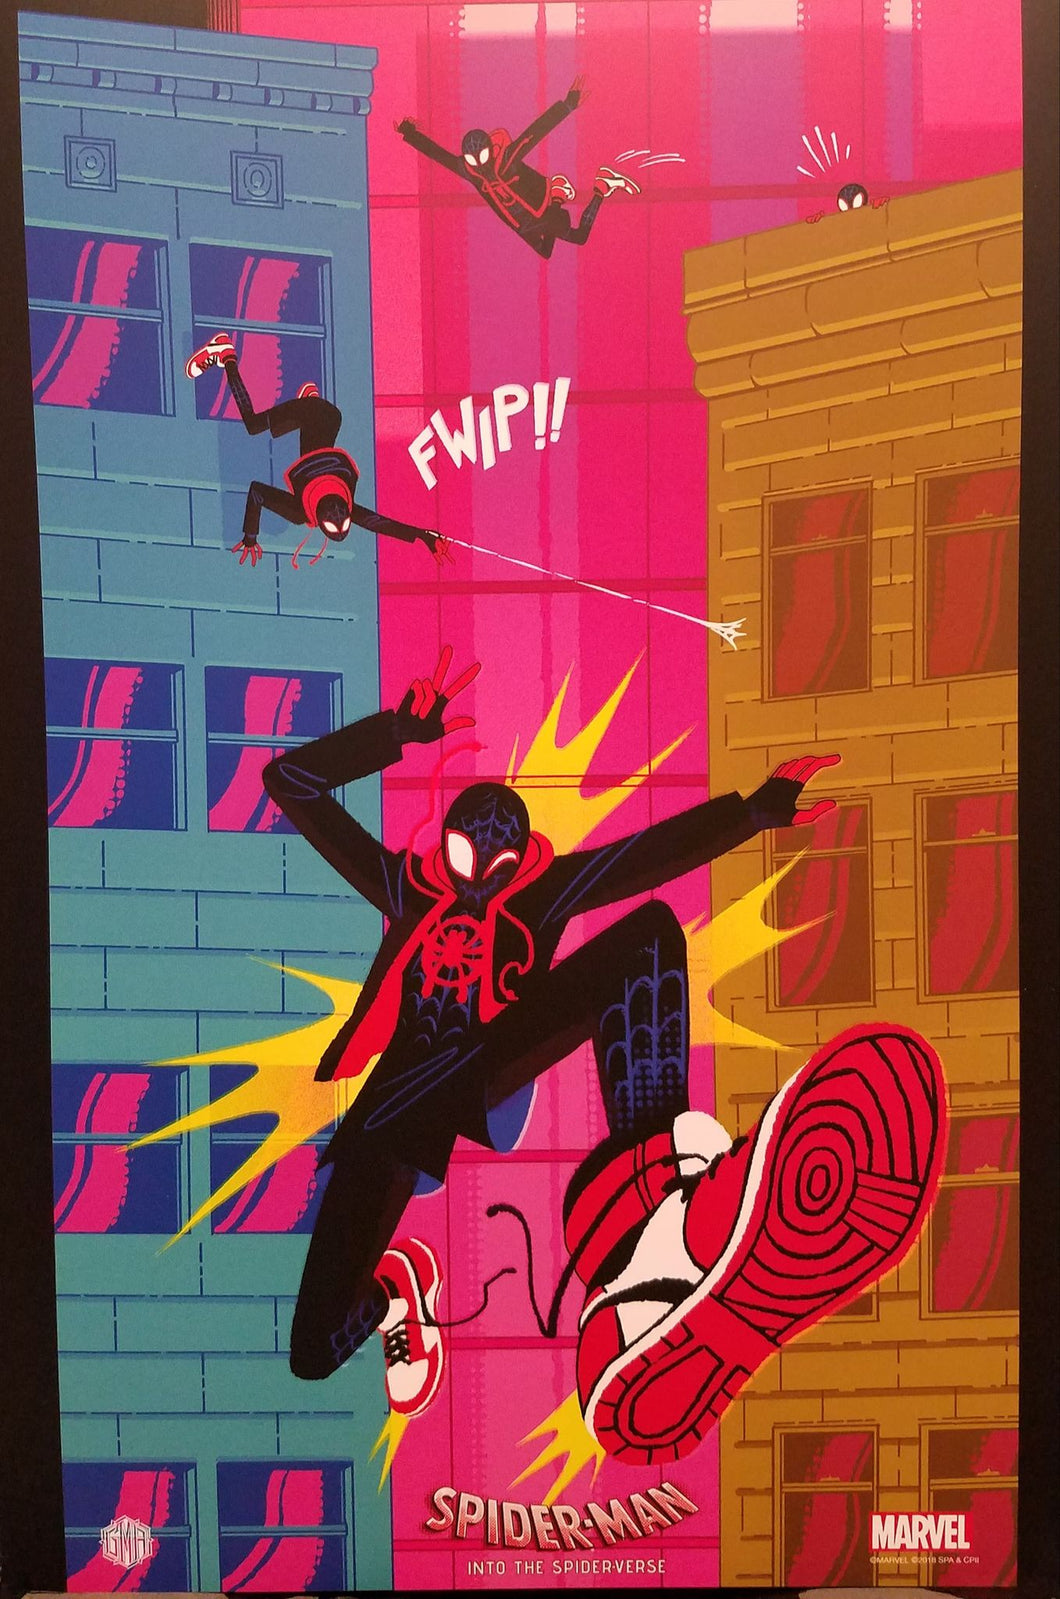 Spider-Verse 11x16 Art Print Poster (Miles Morales Spider-Man, Marvel Comics)